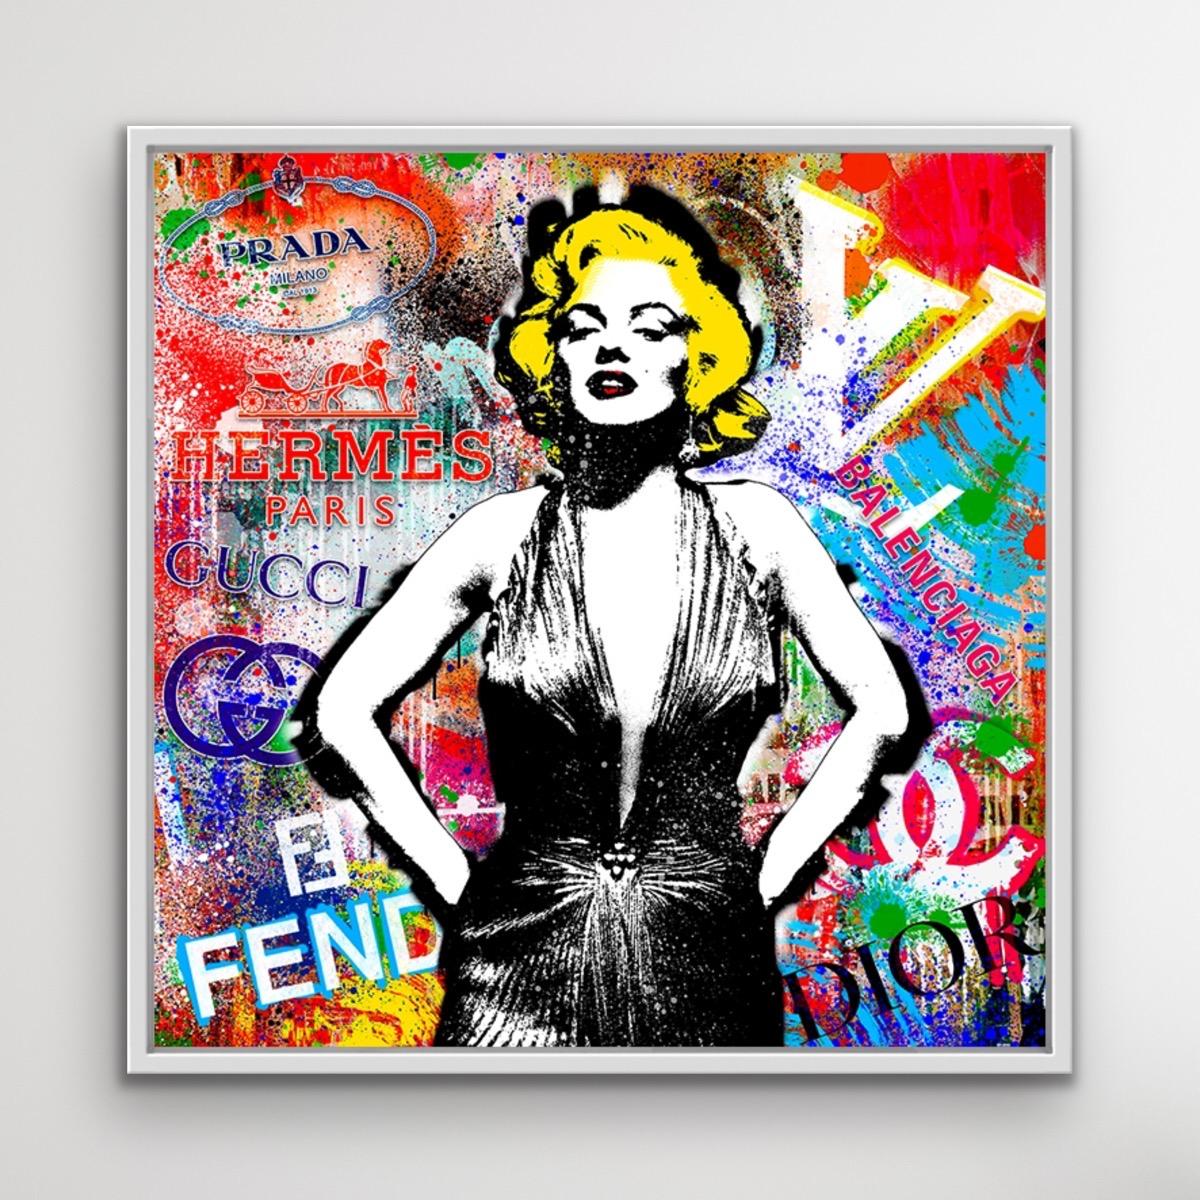 Marilyn als Vicky Debevoise, berühmte Celebrity-Kunstwerke, Hollywood-Kunst, Urban Art (Streetart), Painting, von Agent X